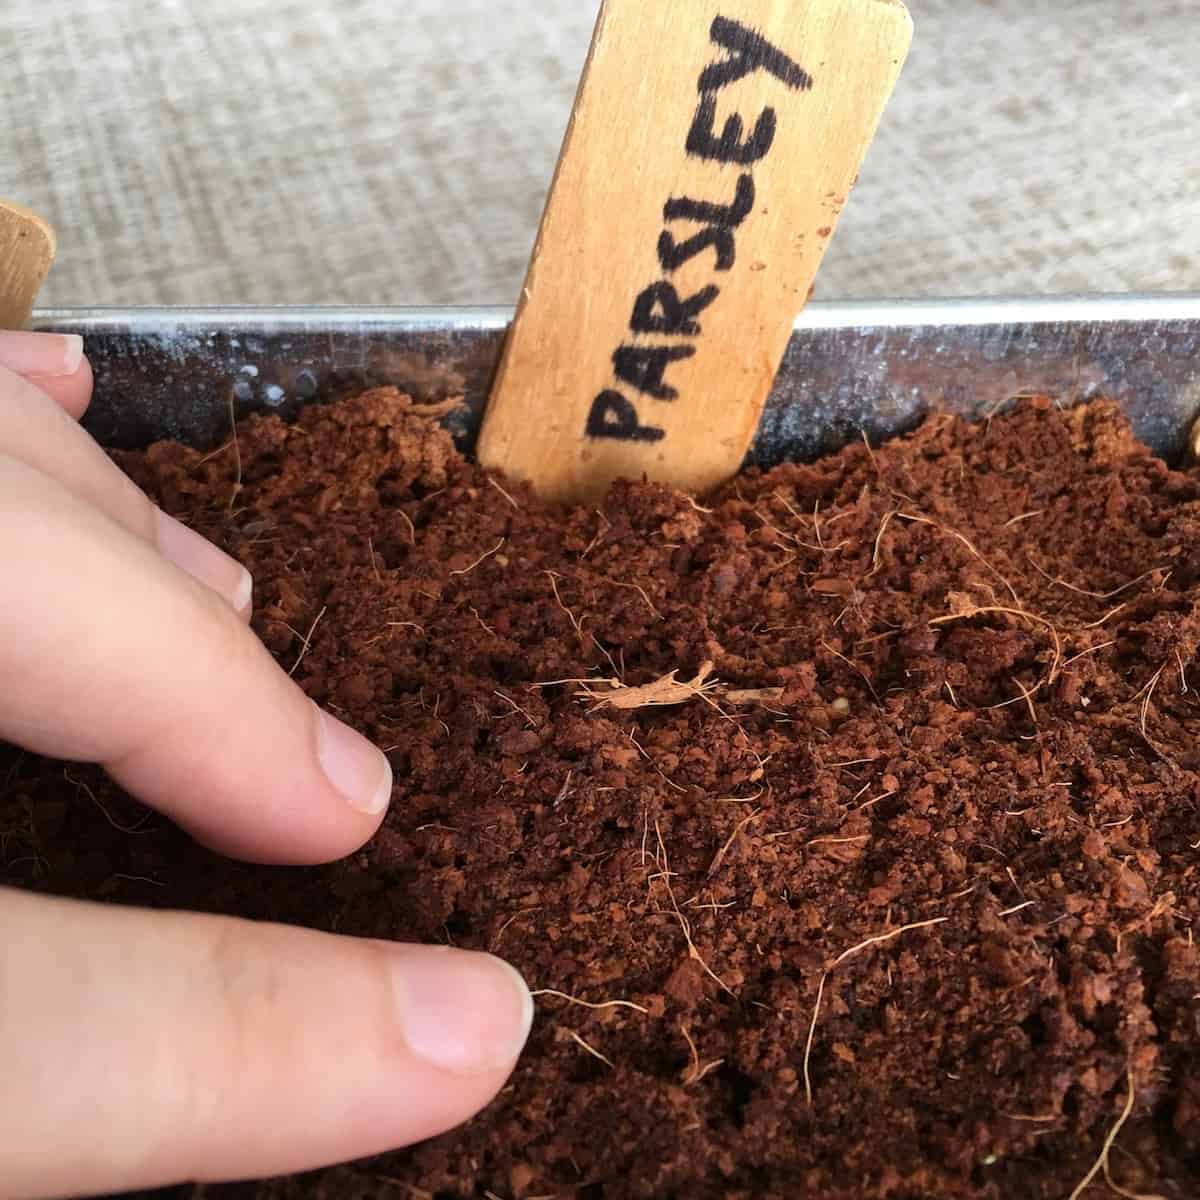 Growing parsley seeds in coco coir